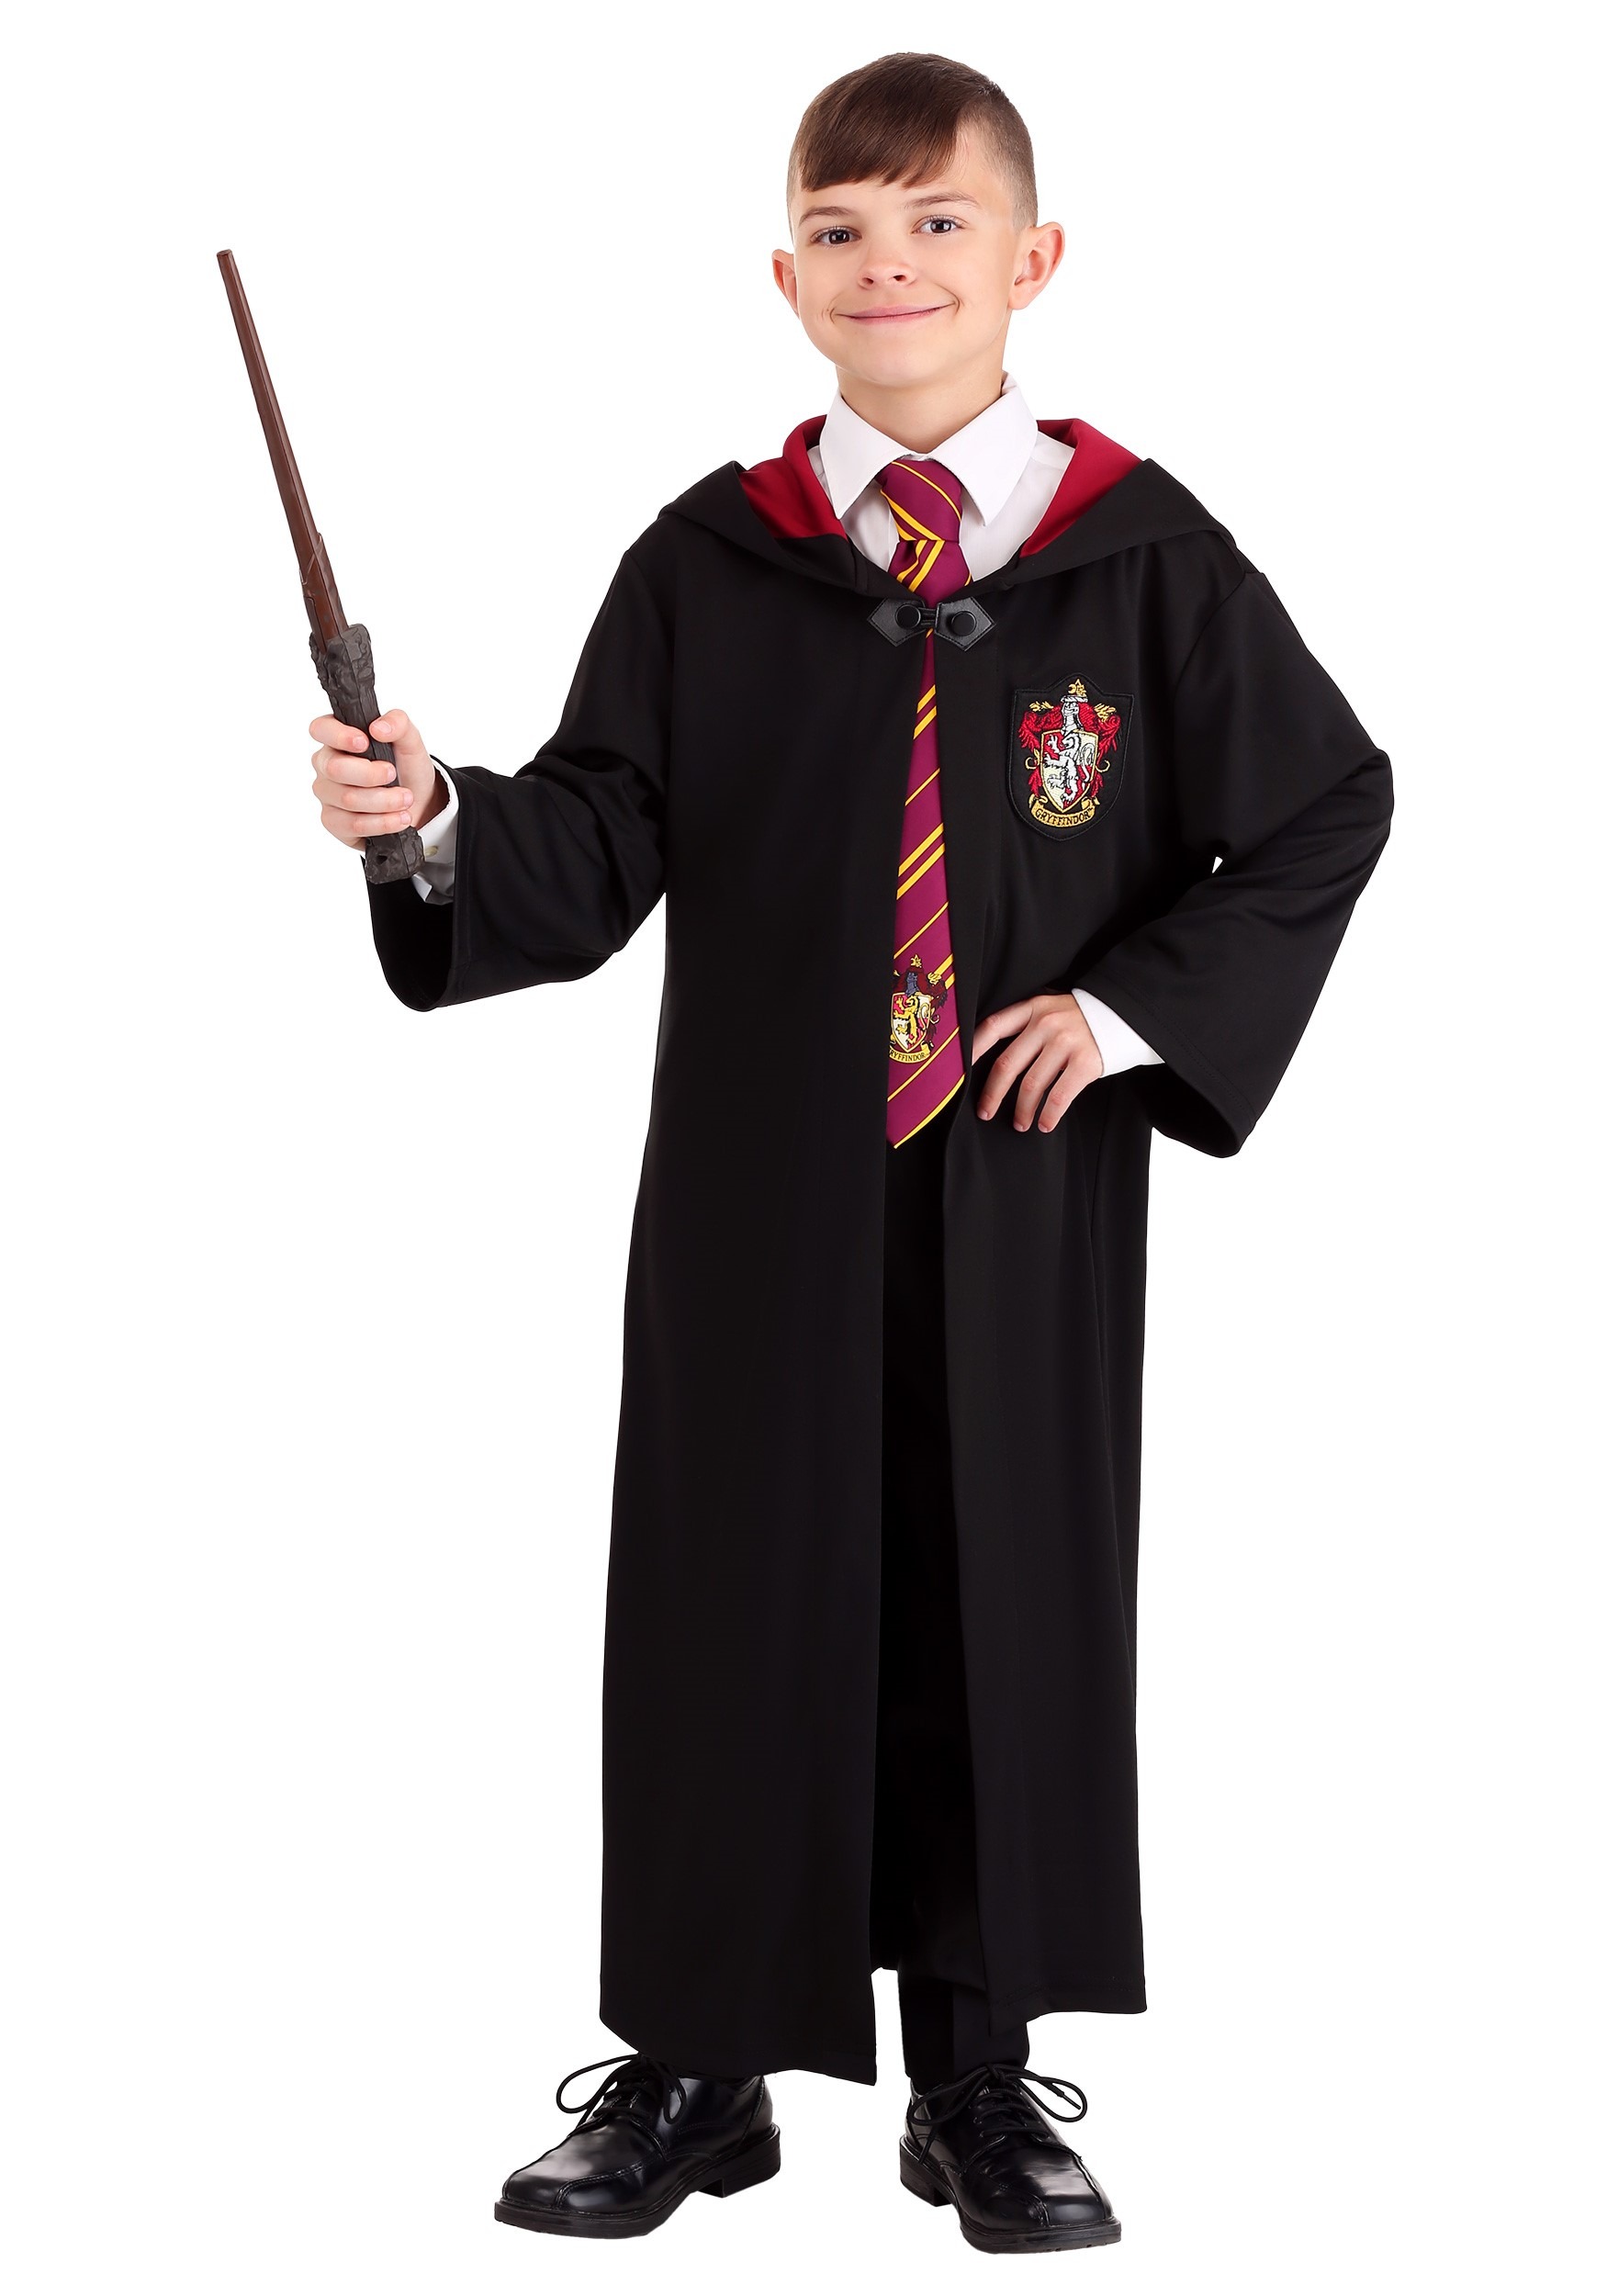 científico repentinamente Rápido Harry Potter Gryffindor Robe Costume for Kids